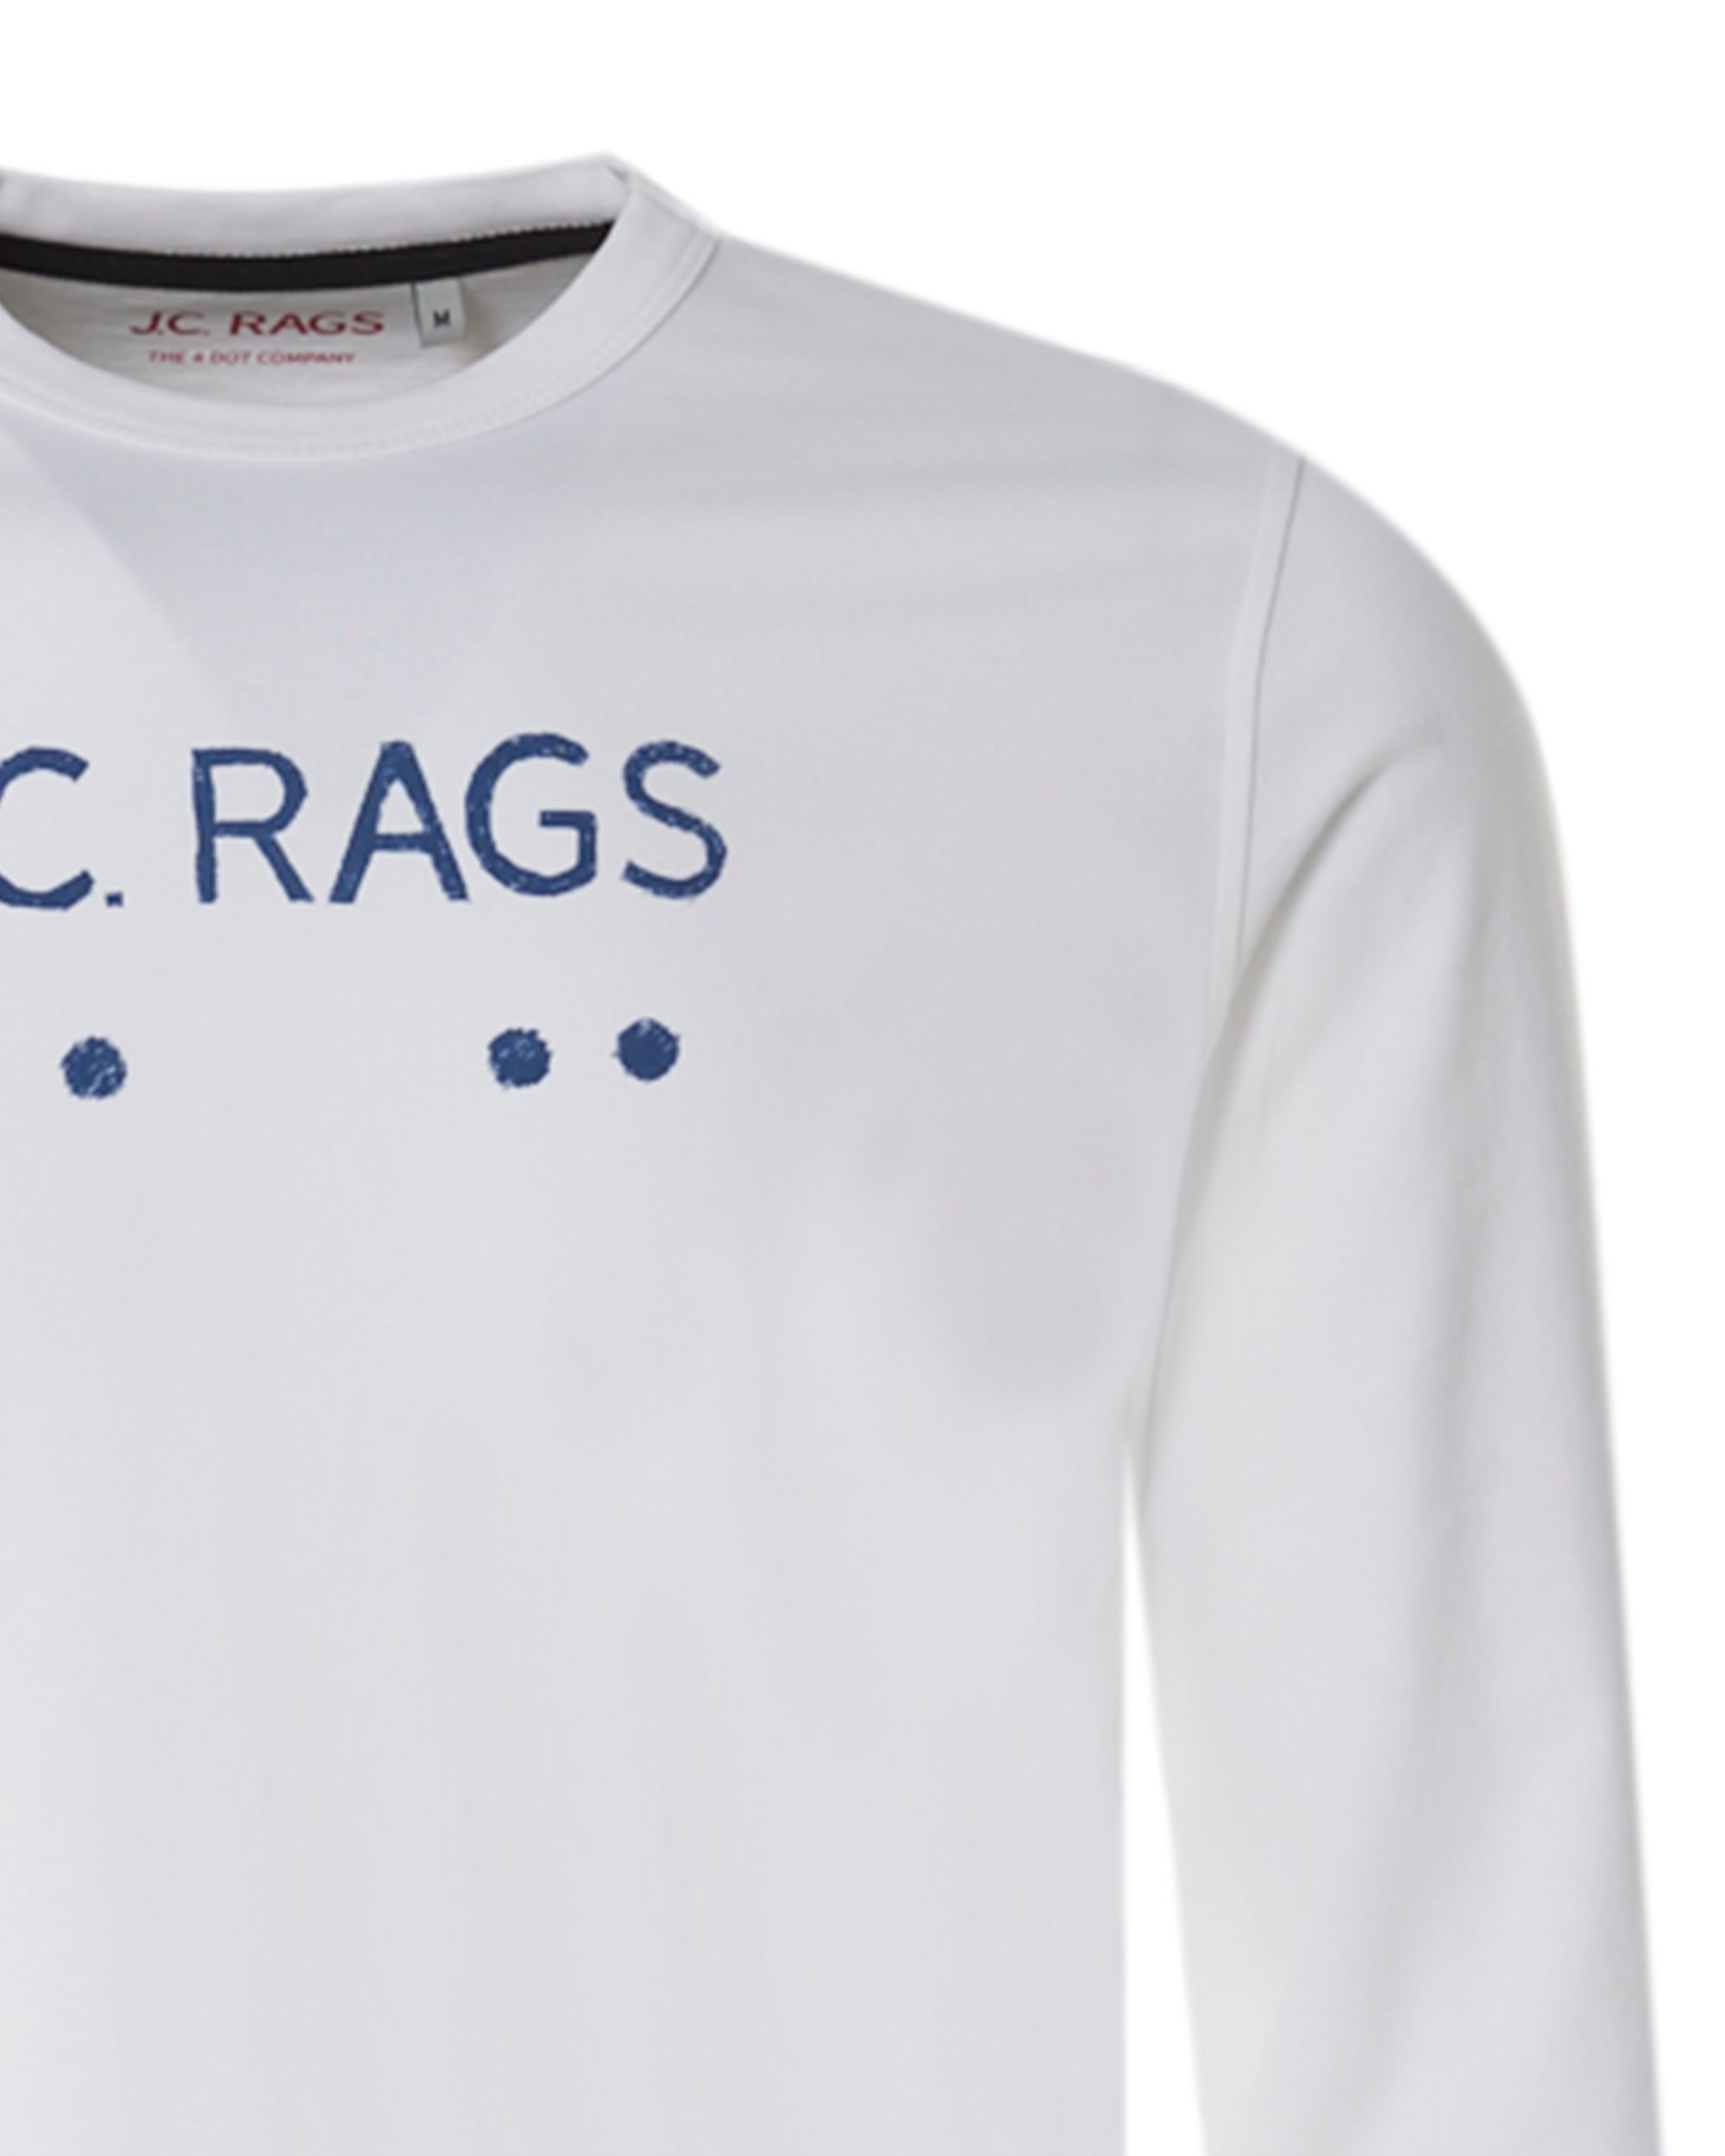 J.C. RAGS Renzo T-shirt LM Ecru uni 076966-001-L